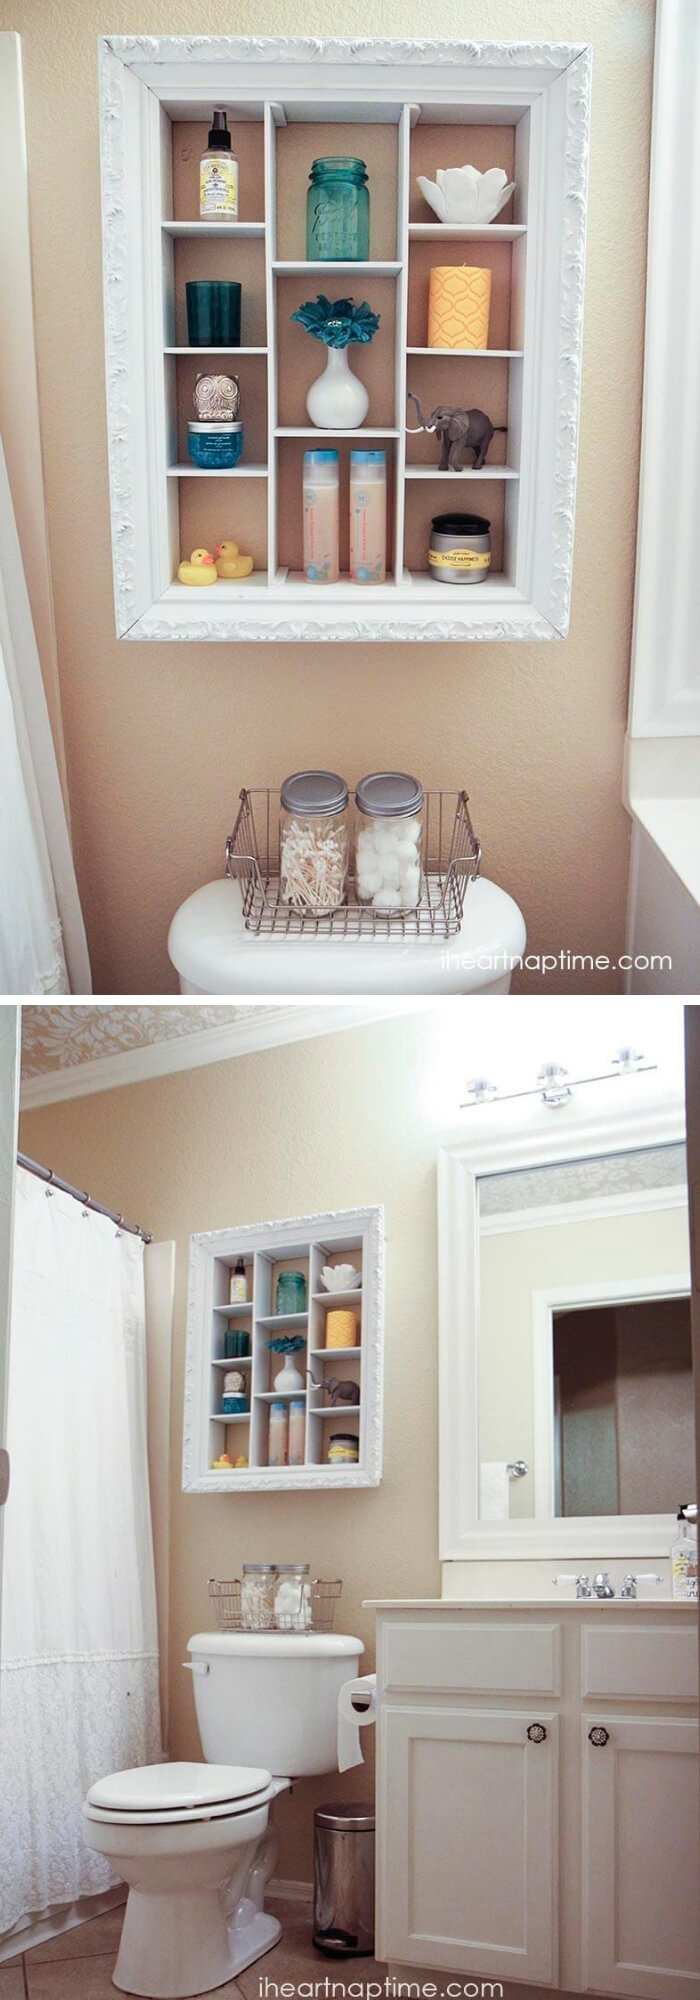 Storage Shelf Makeover | Best Over the Toilet Storage Ideas for Bathroom